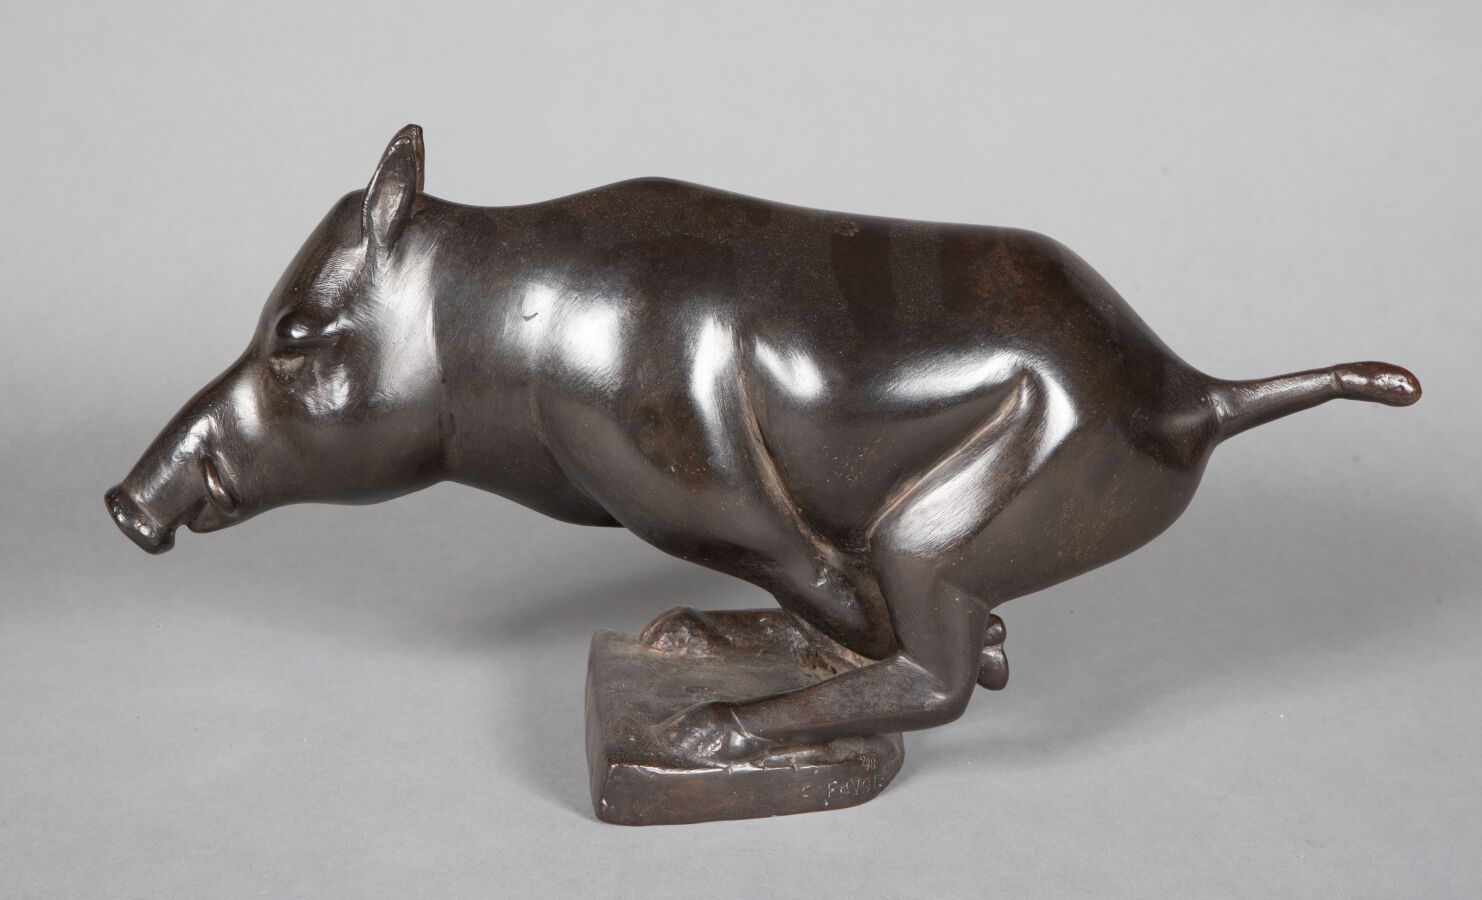 Null C.冯德伦

"野猪"。青铜材质的证明，有阴影的棕色铜锈。F. Pomelle的失蜡铸造。

有签名，2/8，创始人的标记和失蜡标记。

高度为18.&hellip;